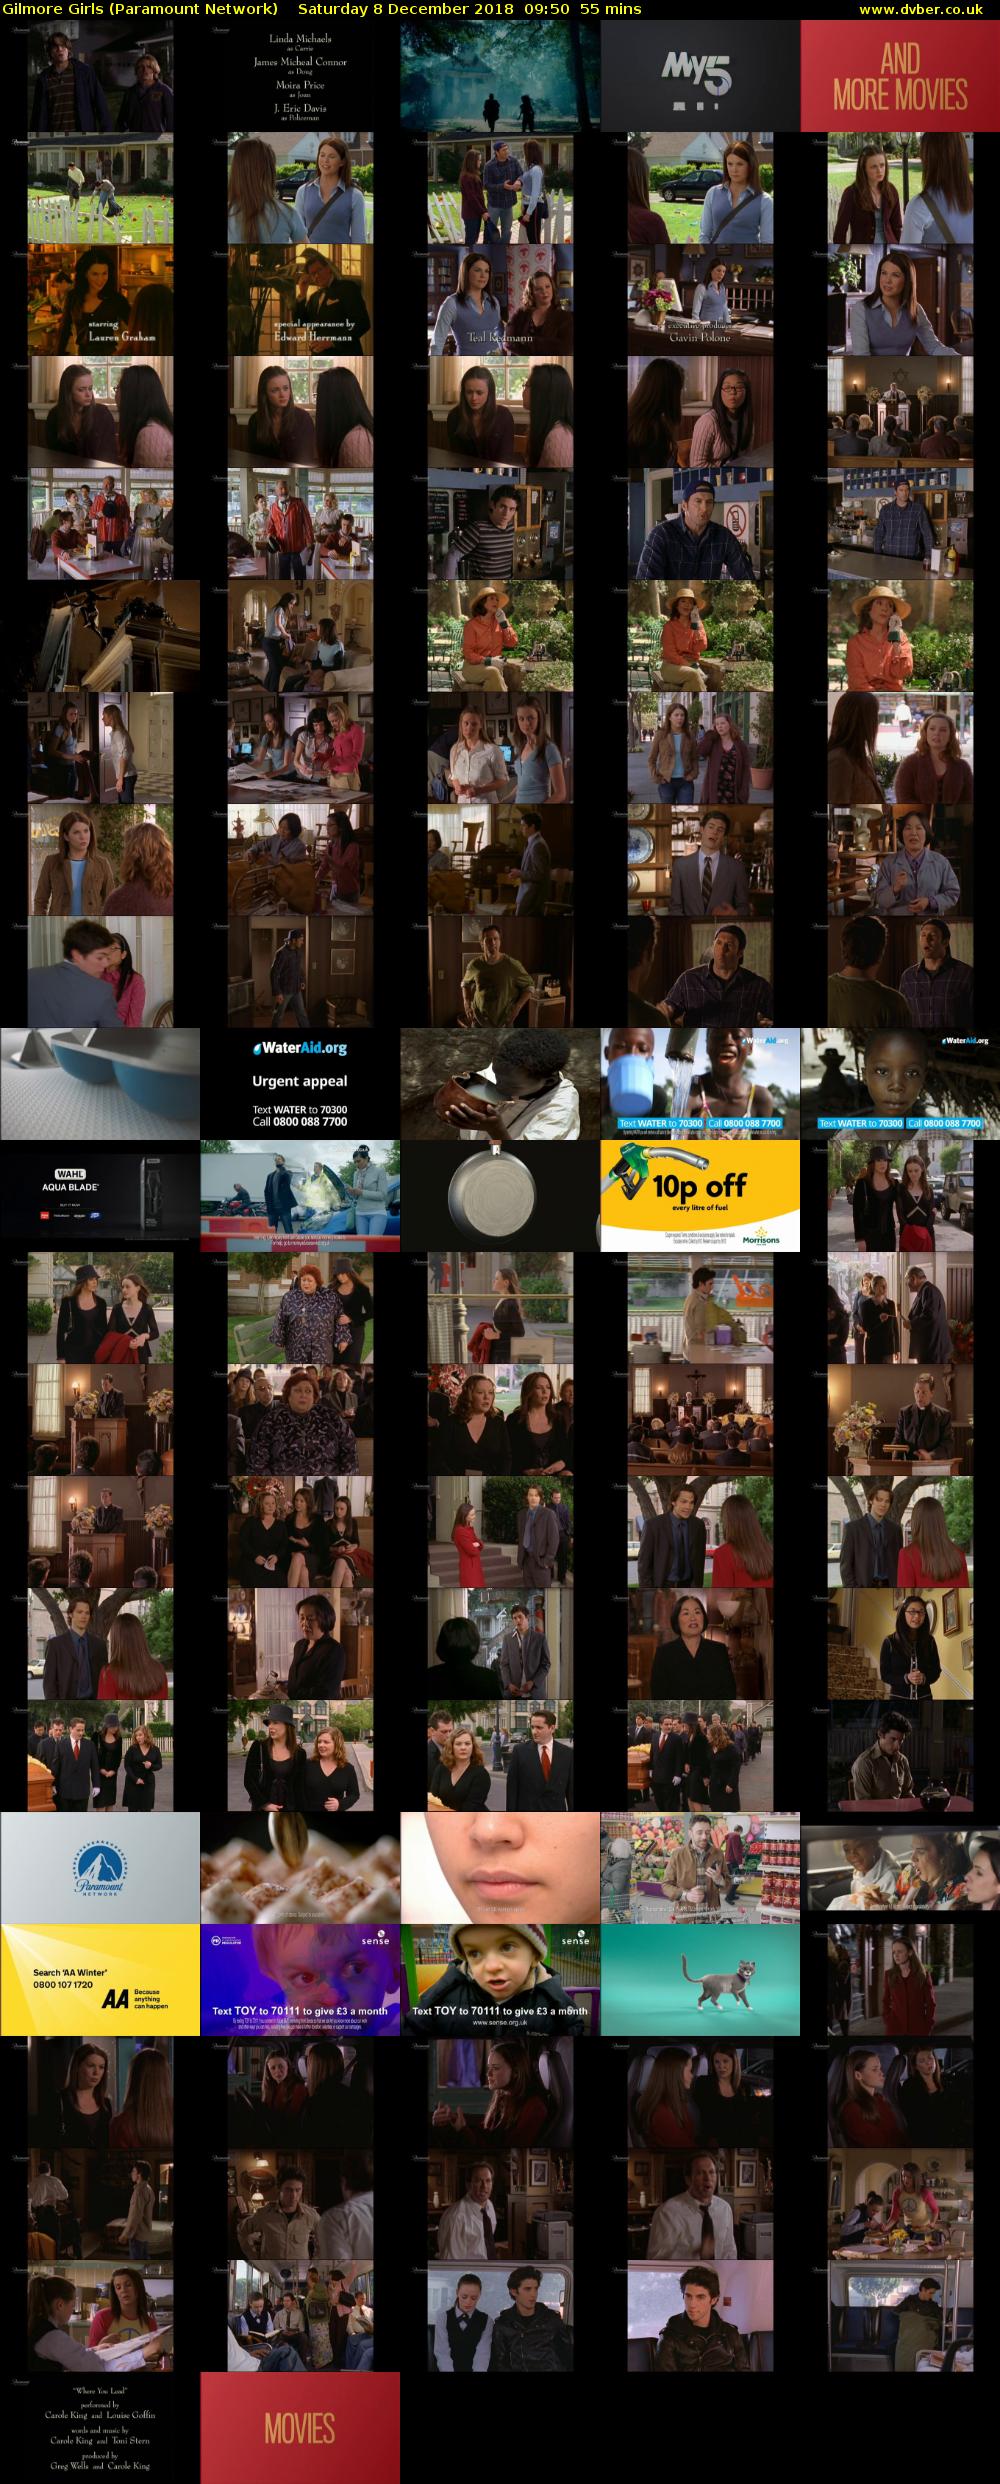 Gilmore Girls (Paramount Network) Saturday 8 December 2018 09:50 - 10:45